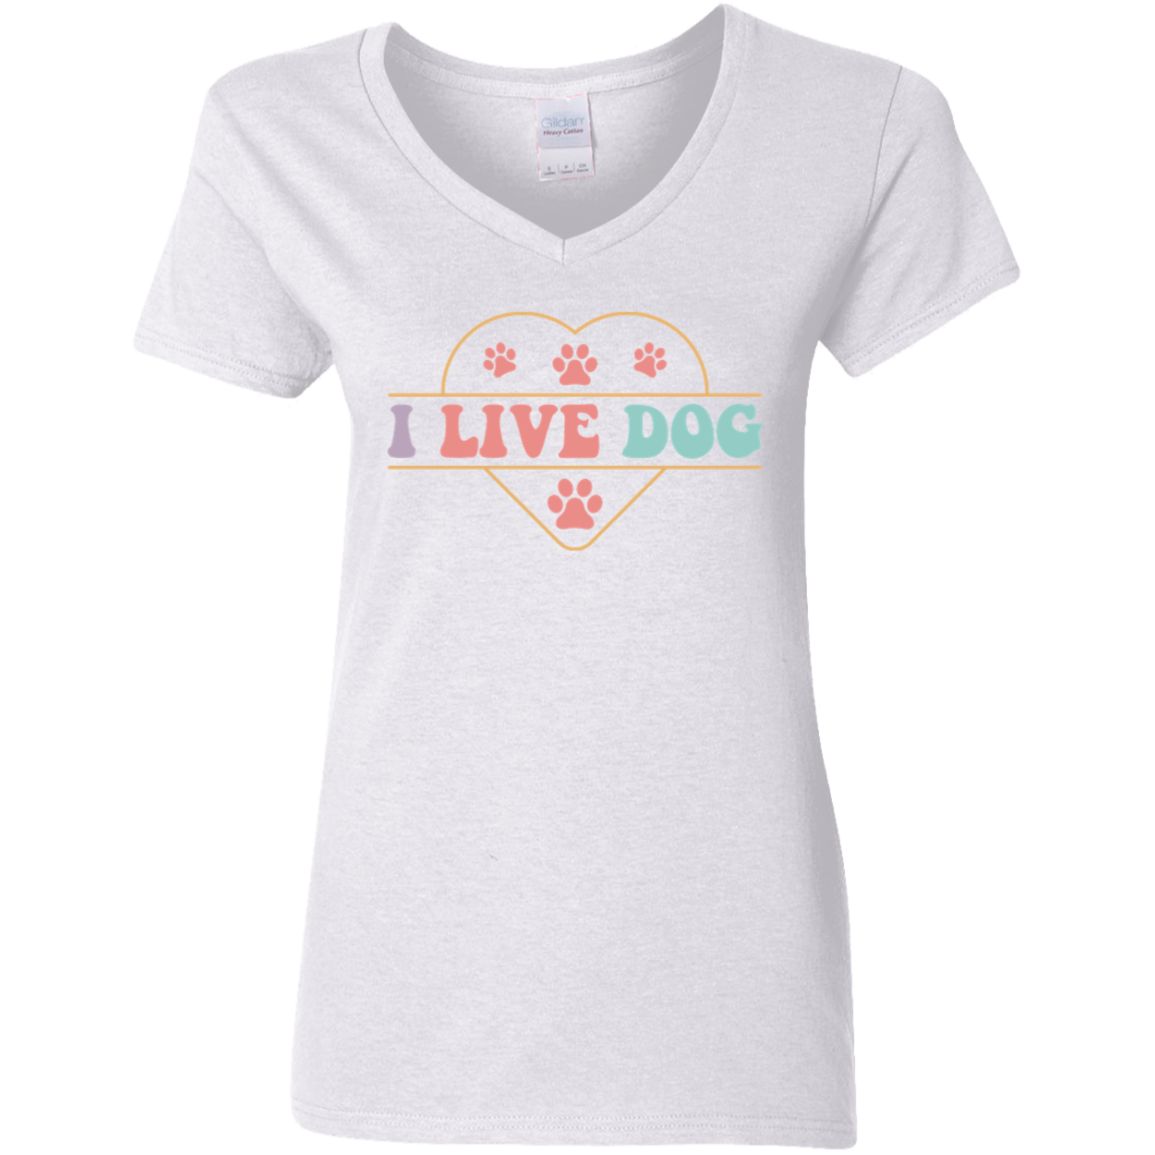 I Live Dog Paw Print Ladies' V-Neck T-Shirt